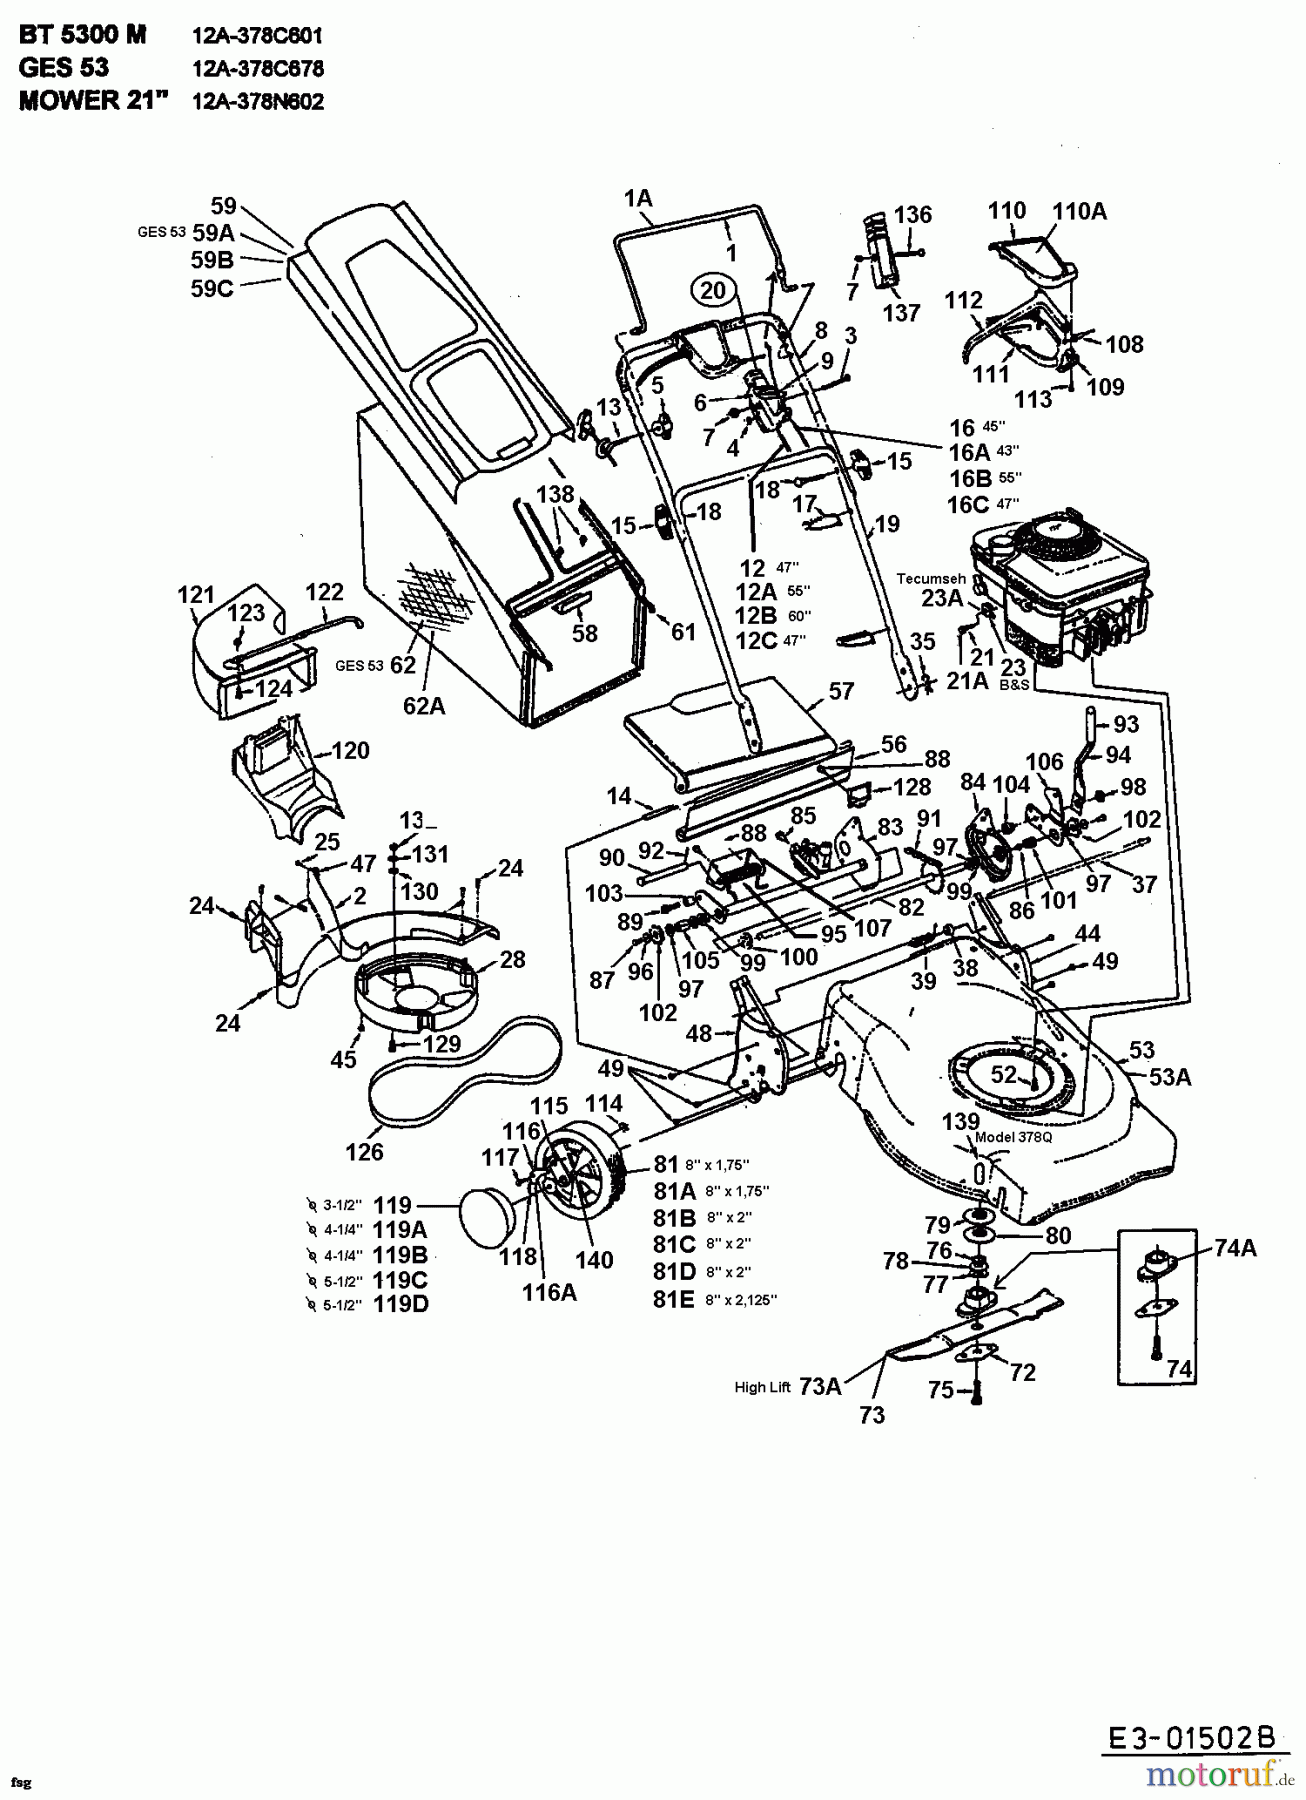  MTD Motormäher mit Antrieb GES 53 E 12AE378O678  (1998) Grundgerät